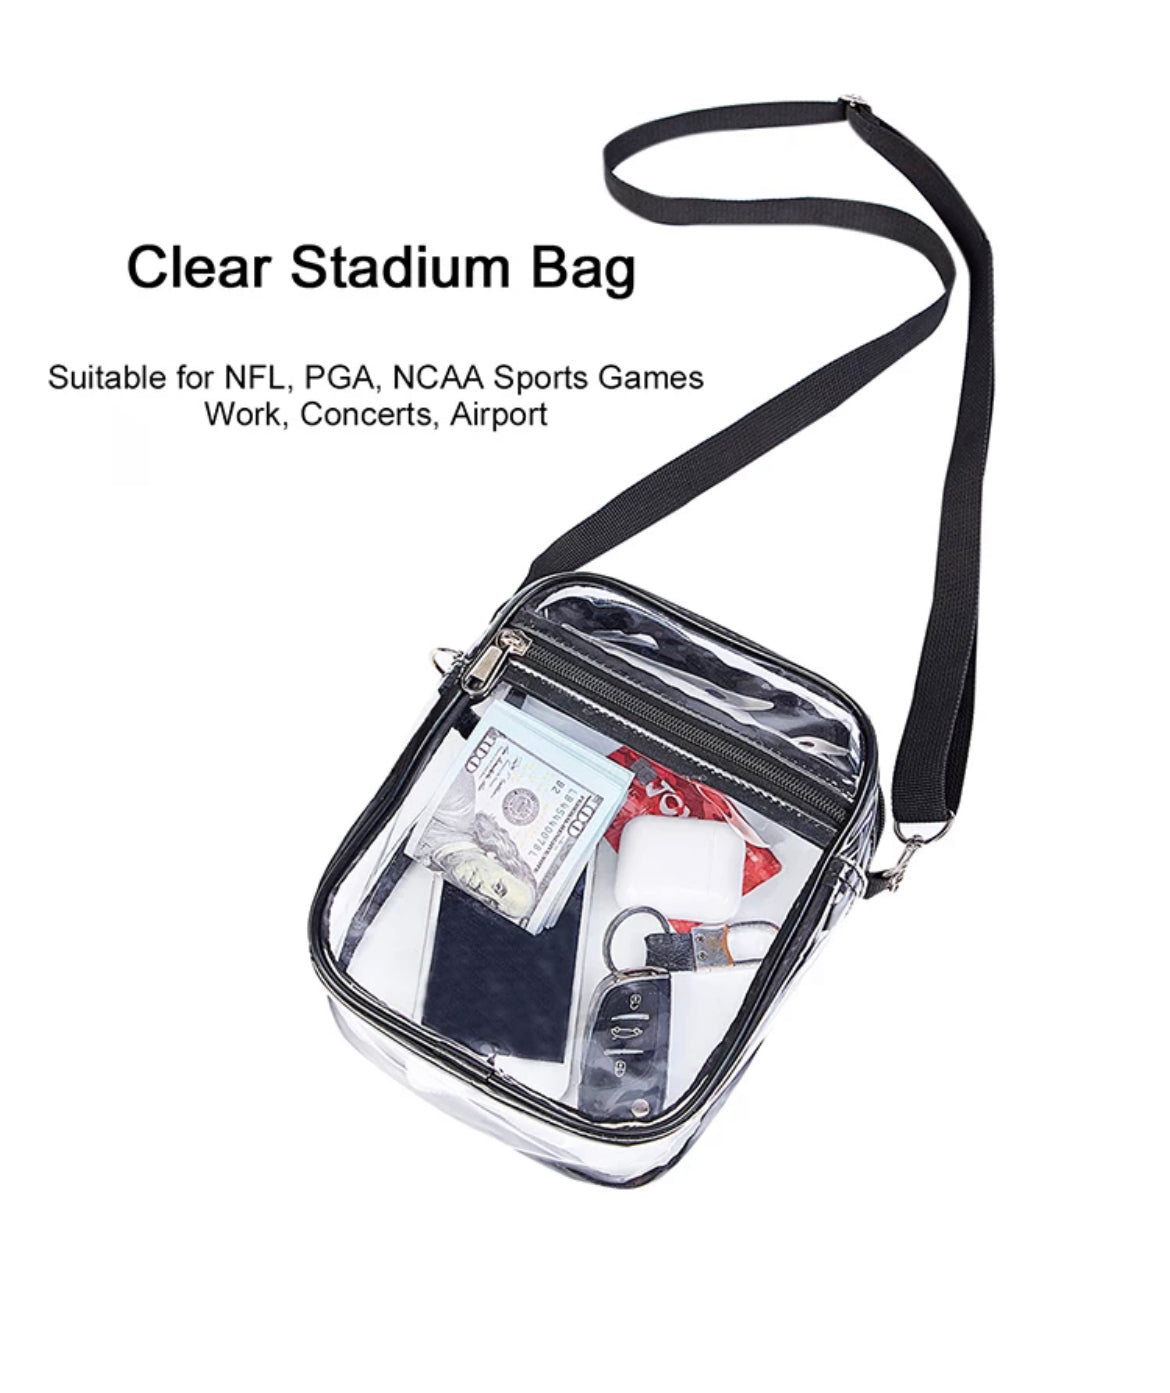 Clear Stadium Bag, Stadium Approved